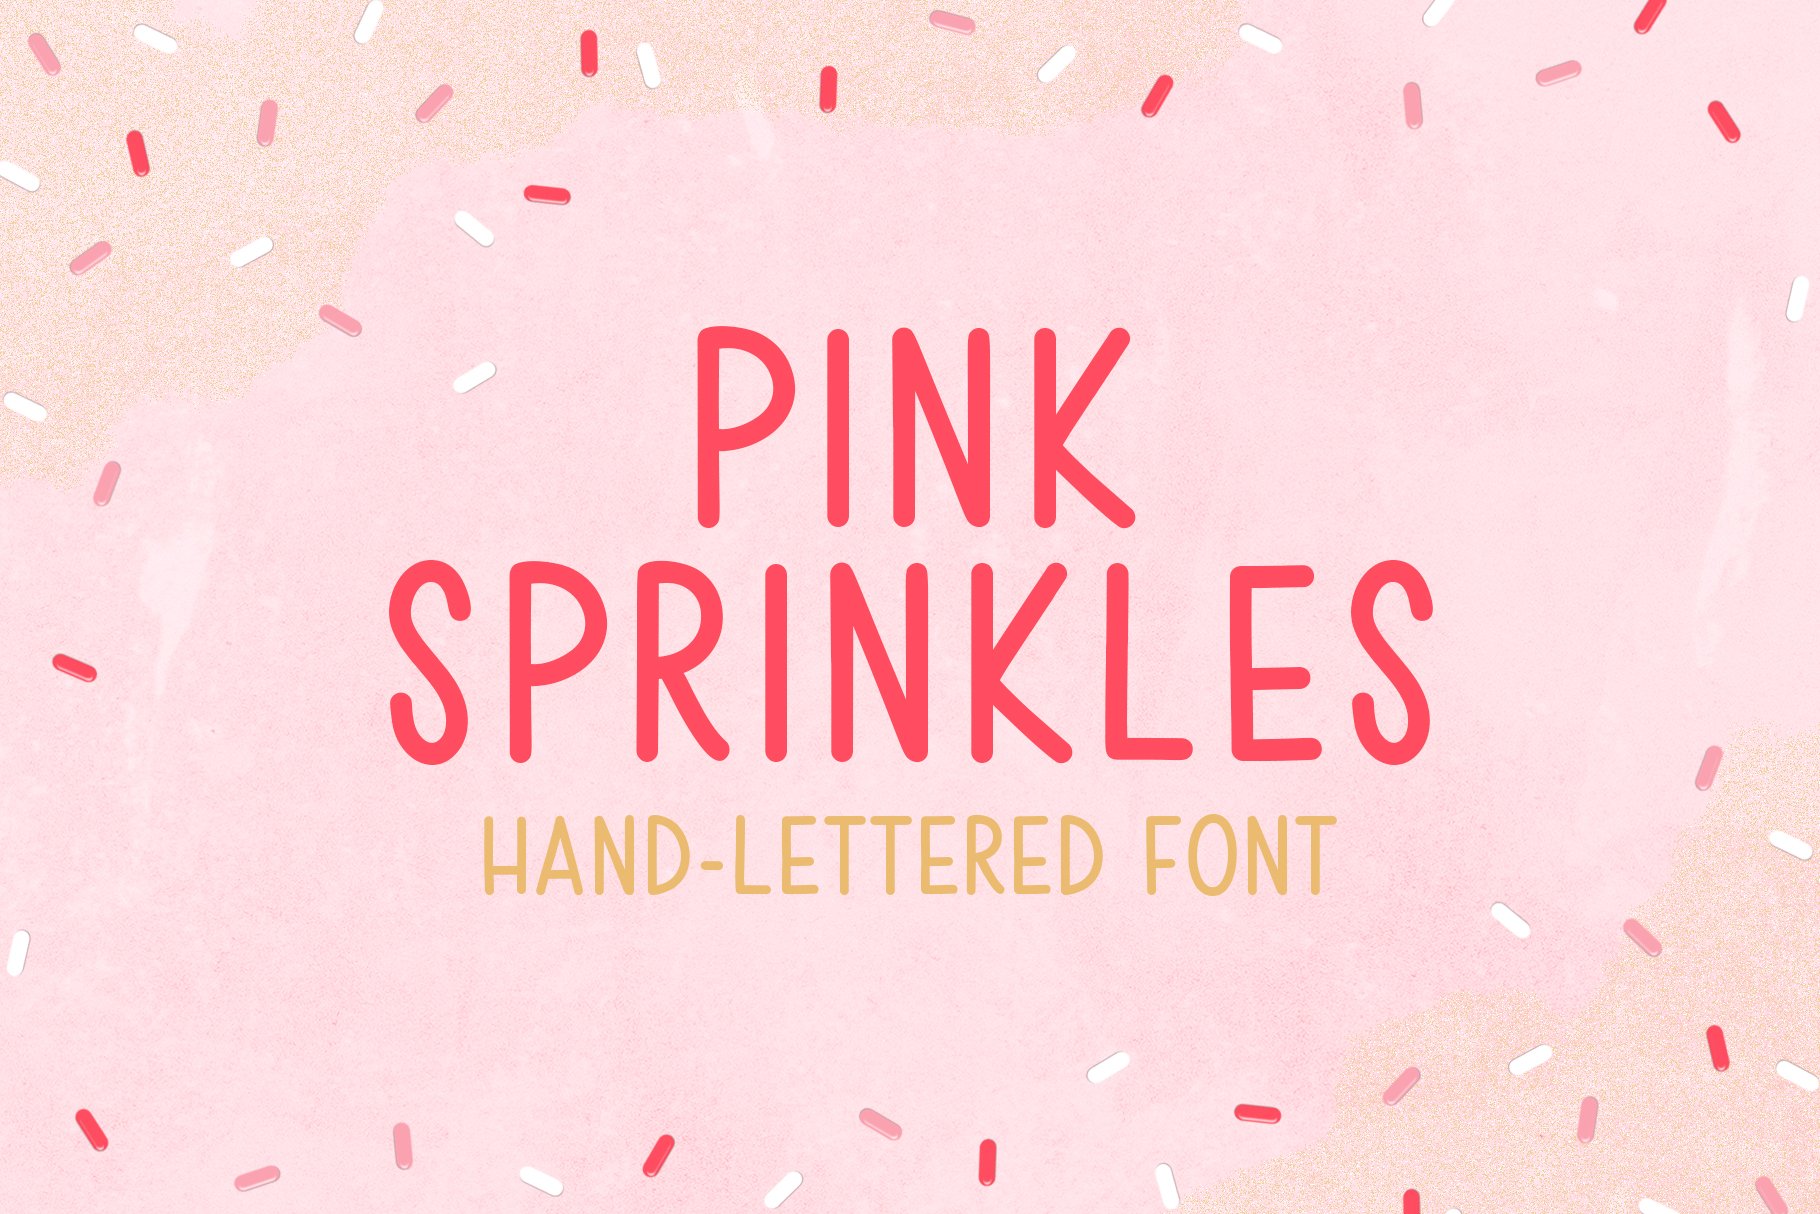 Pink Sprinkles Handwritten Font cover image.